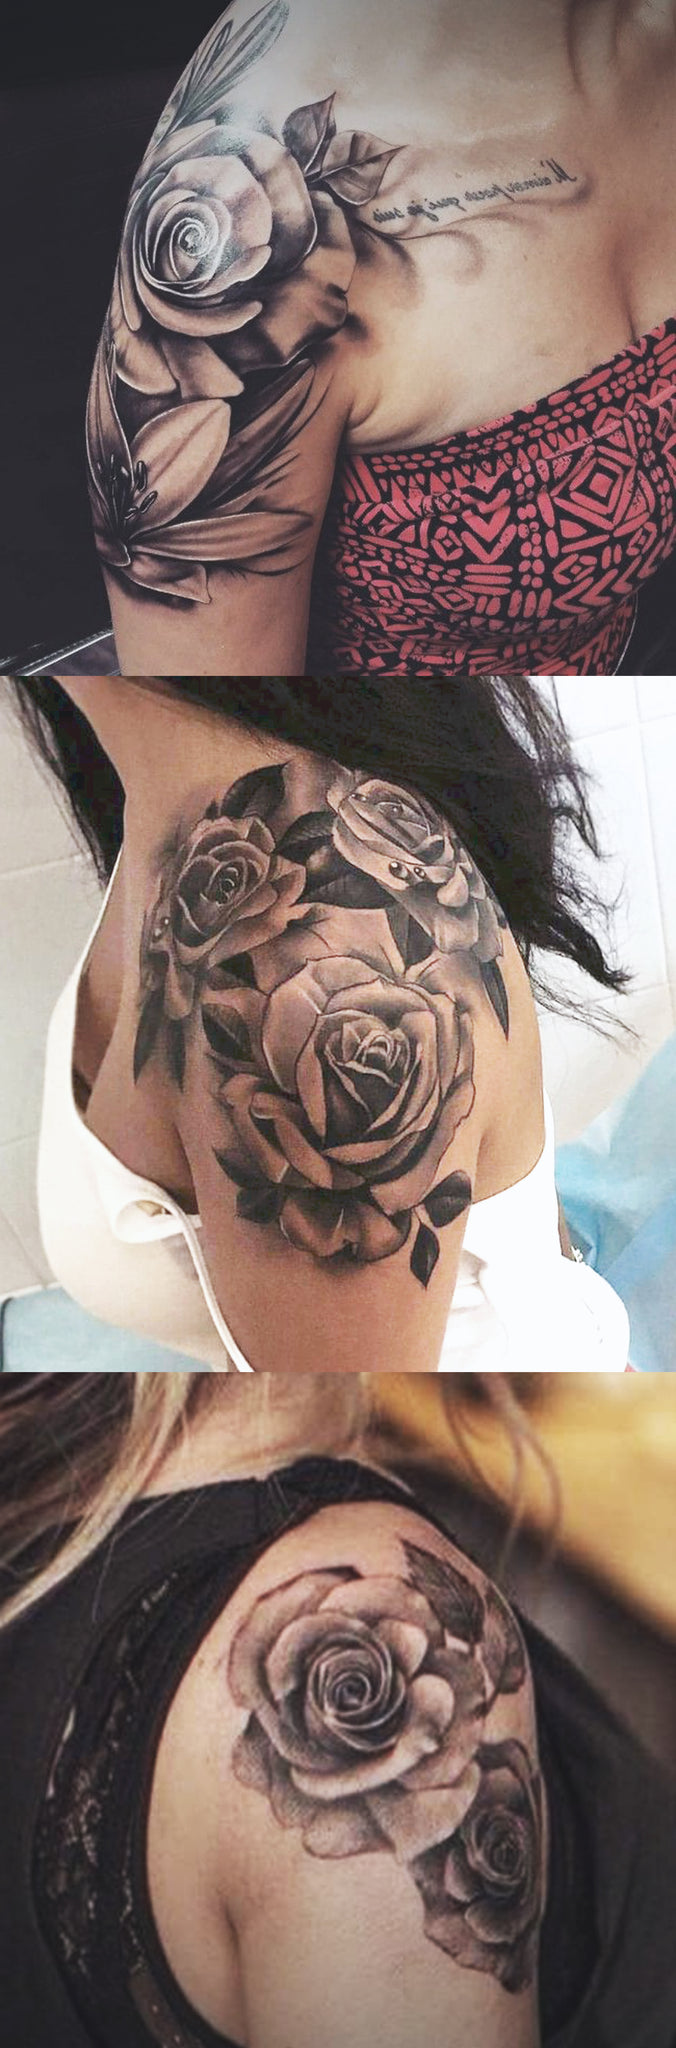 Top 43 Best Flower Shoulder Tattoo Ideas  2021 Inspiration Guide  Shoulder  tattoos for women Flower tattoo shoulder Tattoos for women flowers